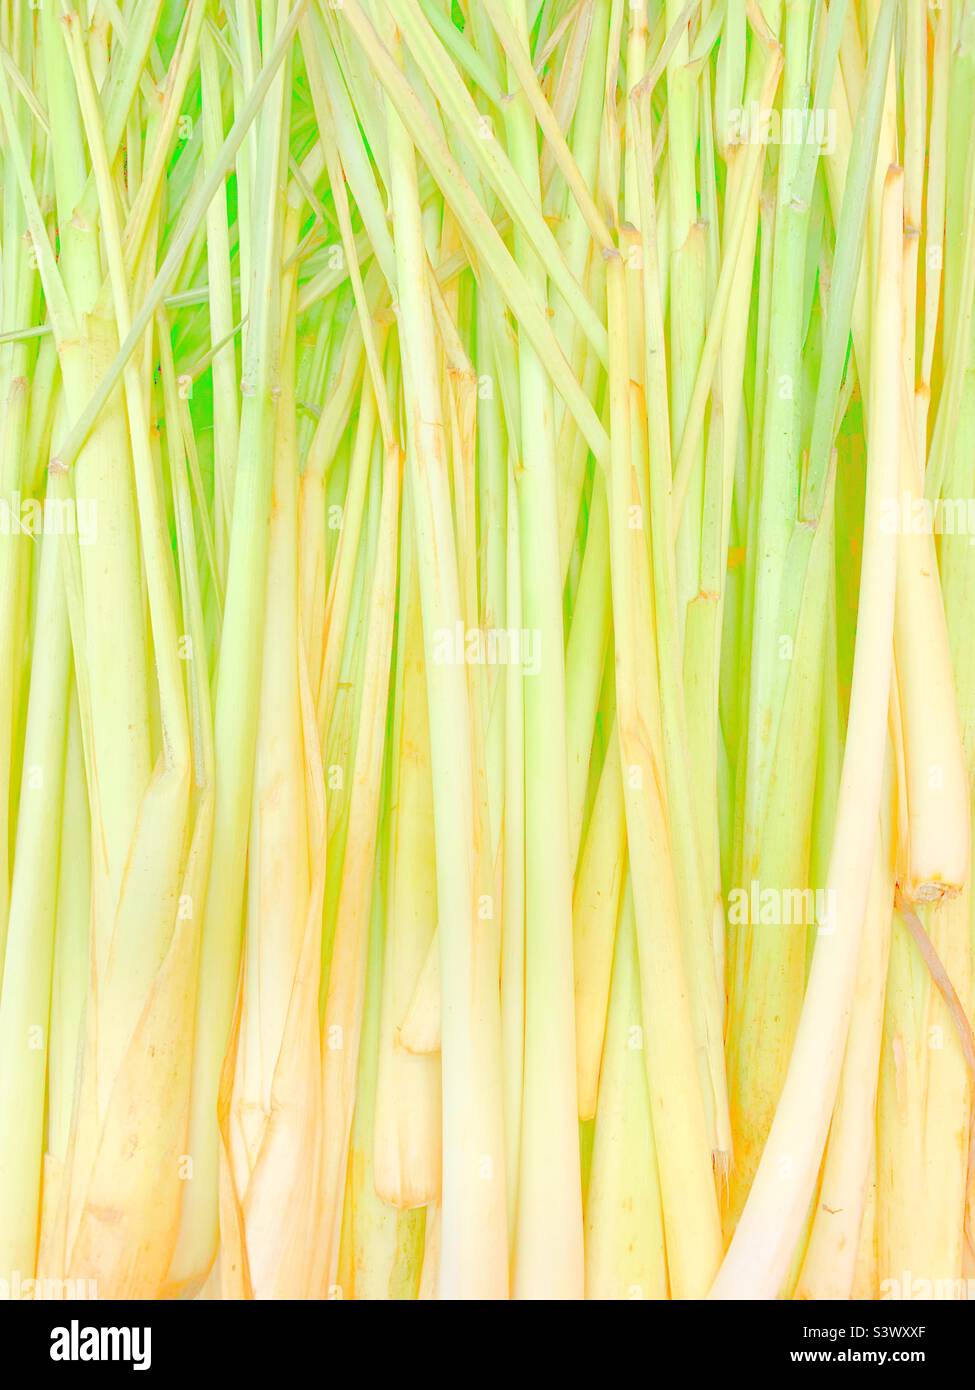 Faded view of bright fresh lemongrass stalks. Stock Photo